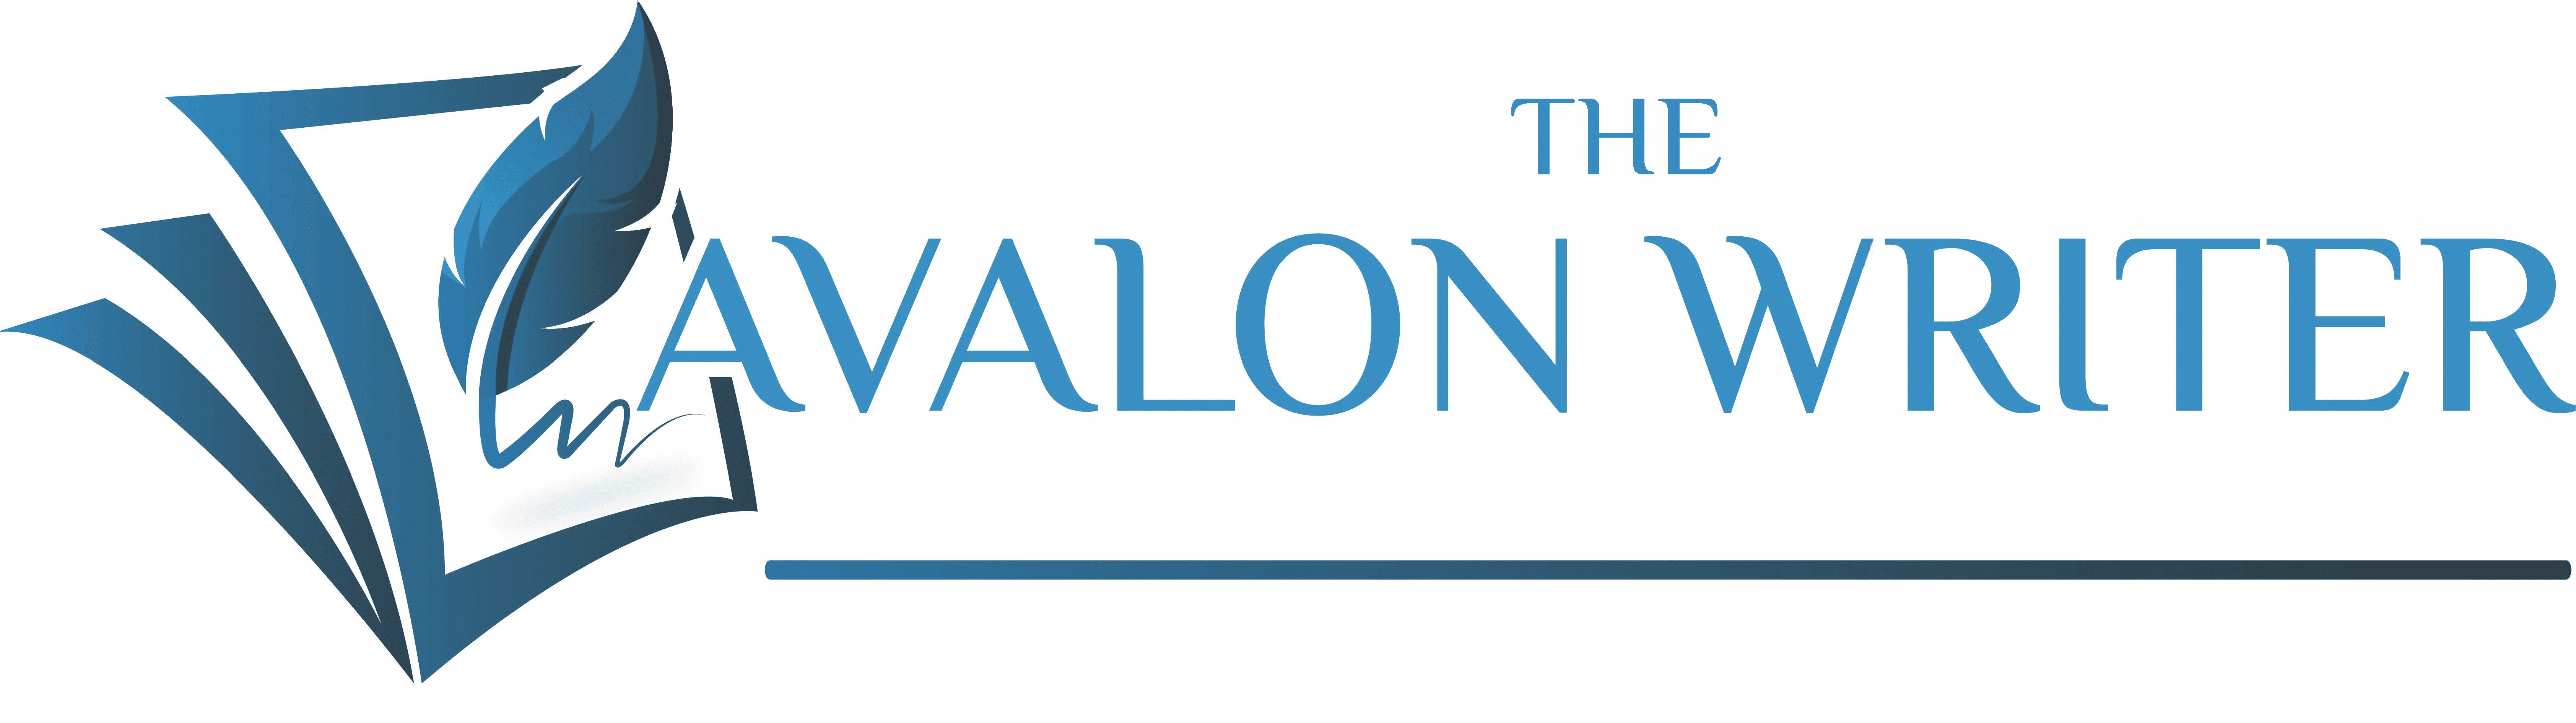 The Avalon Writer